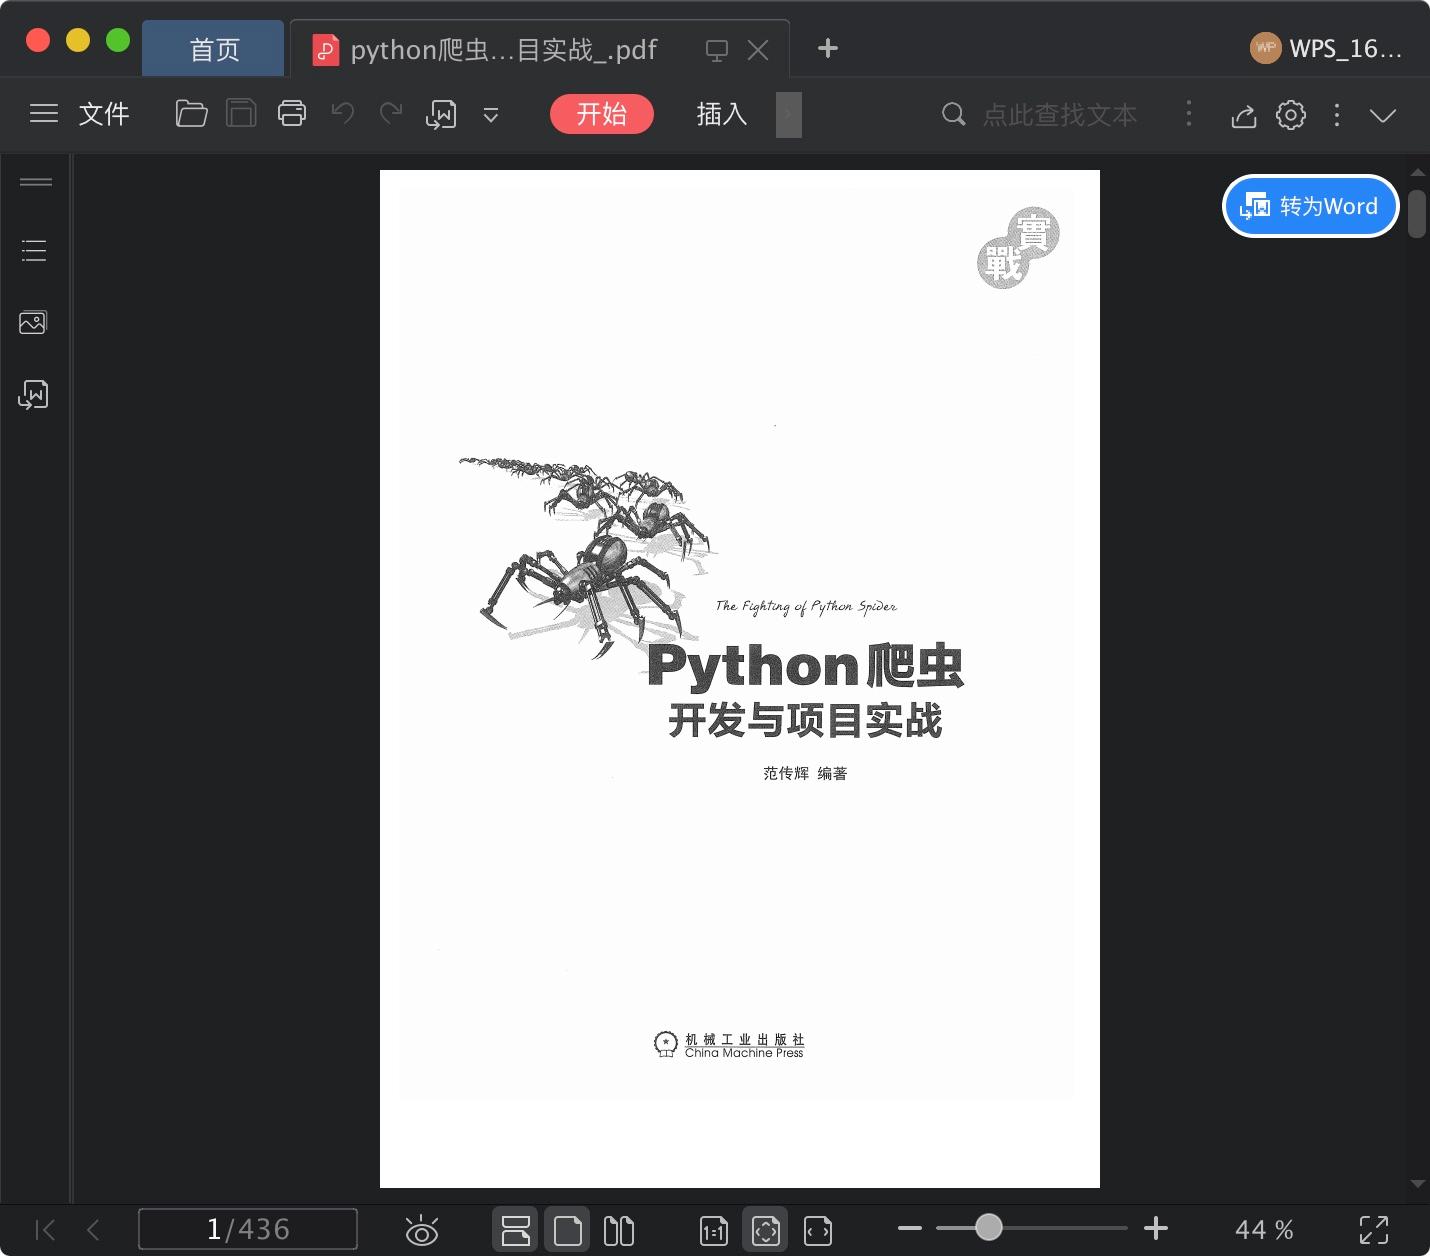 python爬虫开发与项目实战pdf电子书籍下载百度云